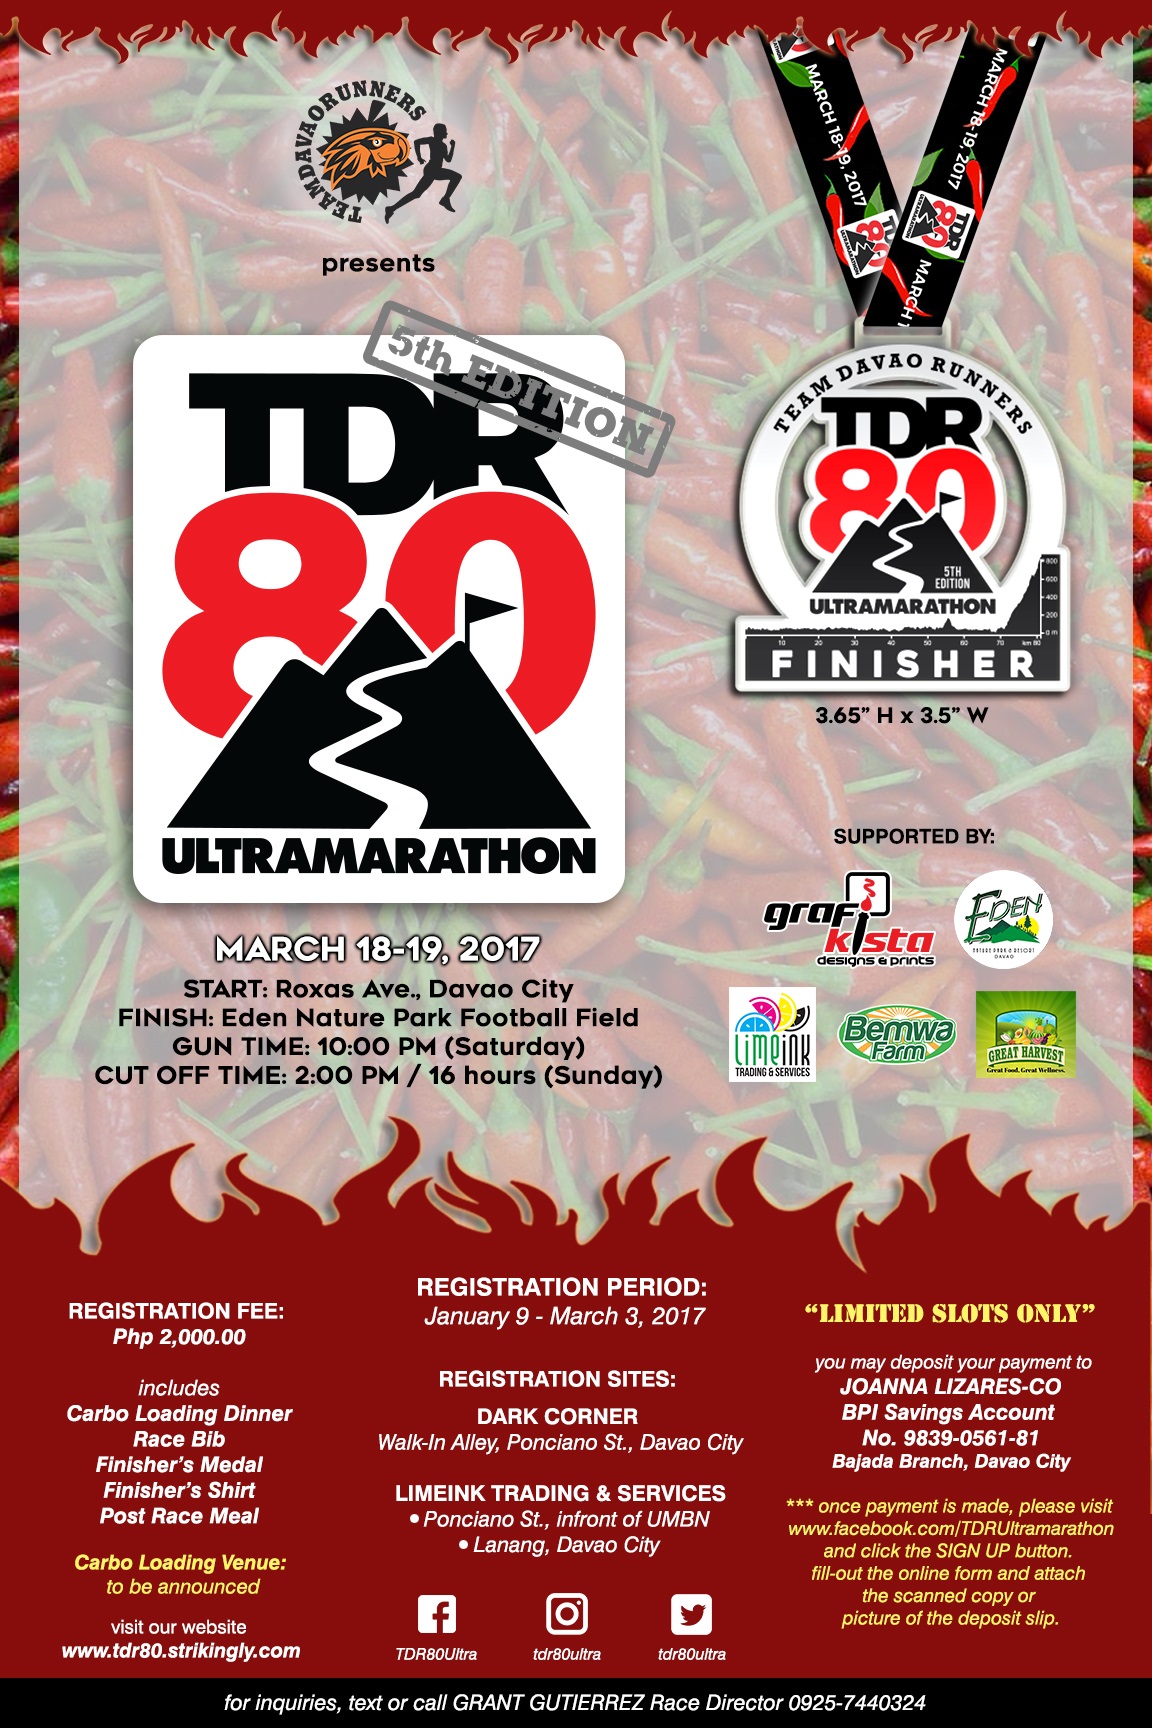 TDR80 Ultramarathon 2017 Poster